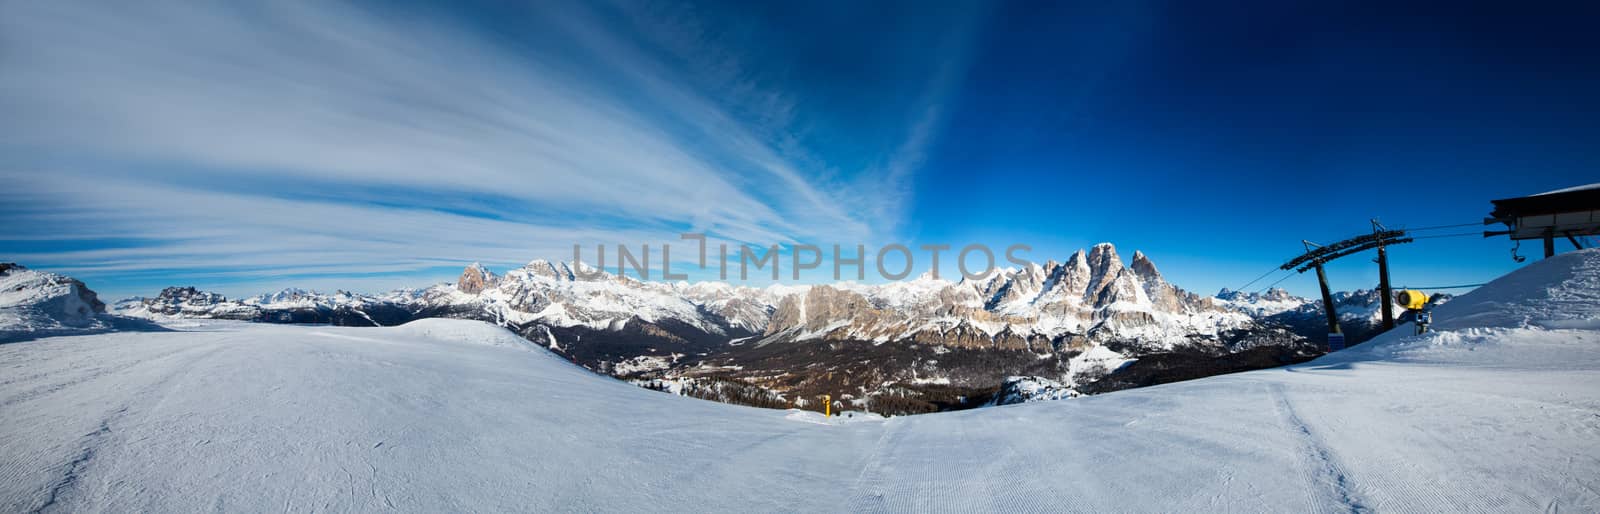 Dolomities winter mountains ski resort by destillat